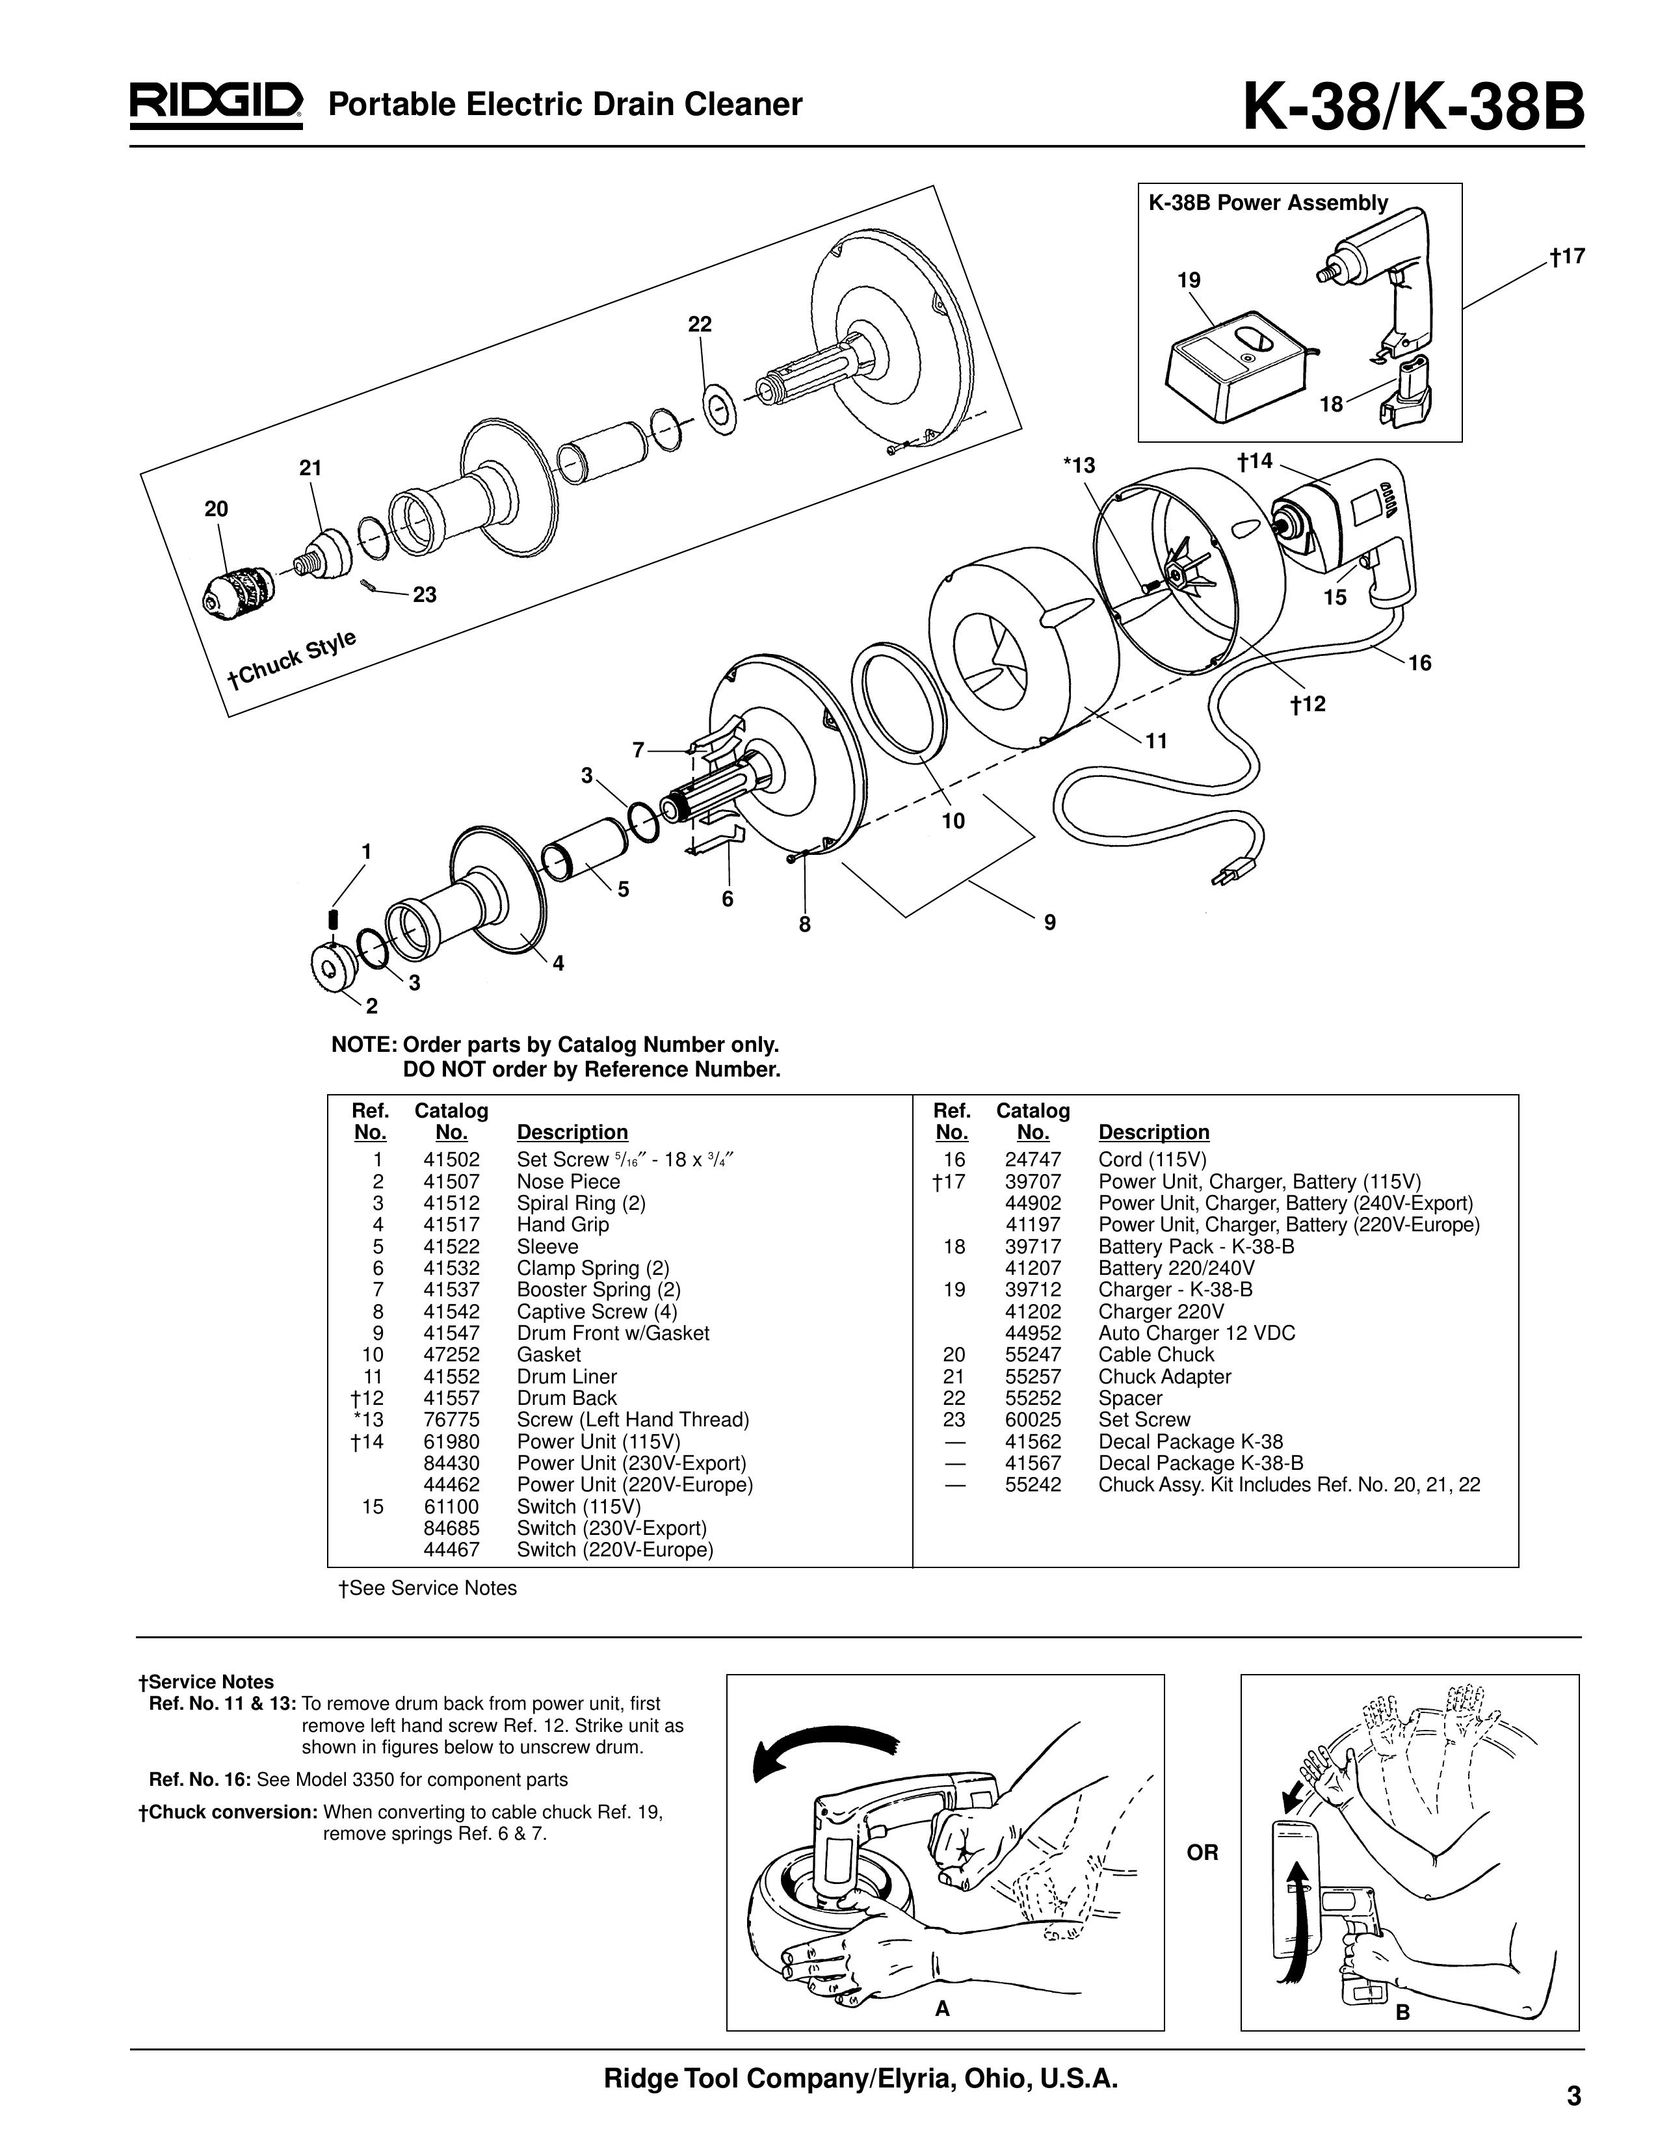 RIDGID K-38B Plumbing Product User Manual